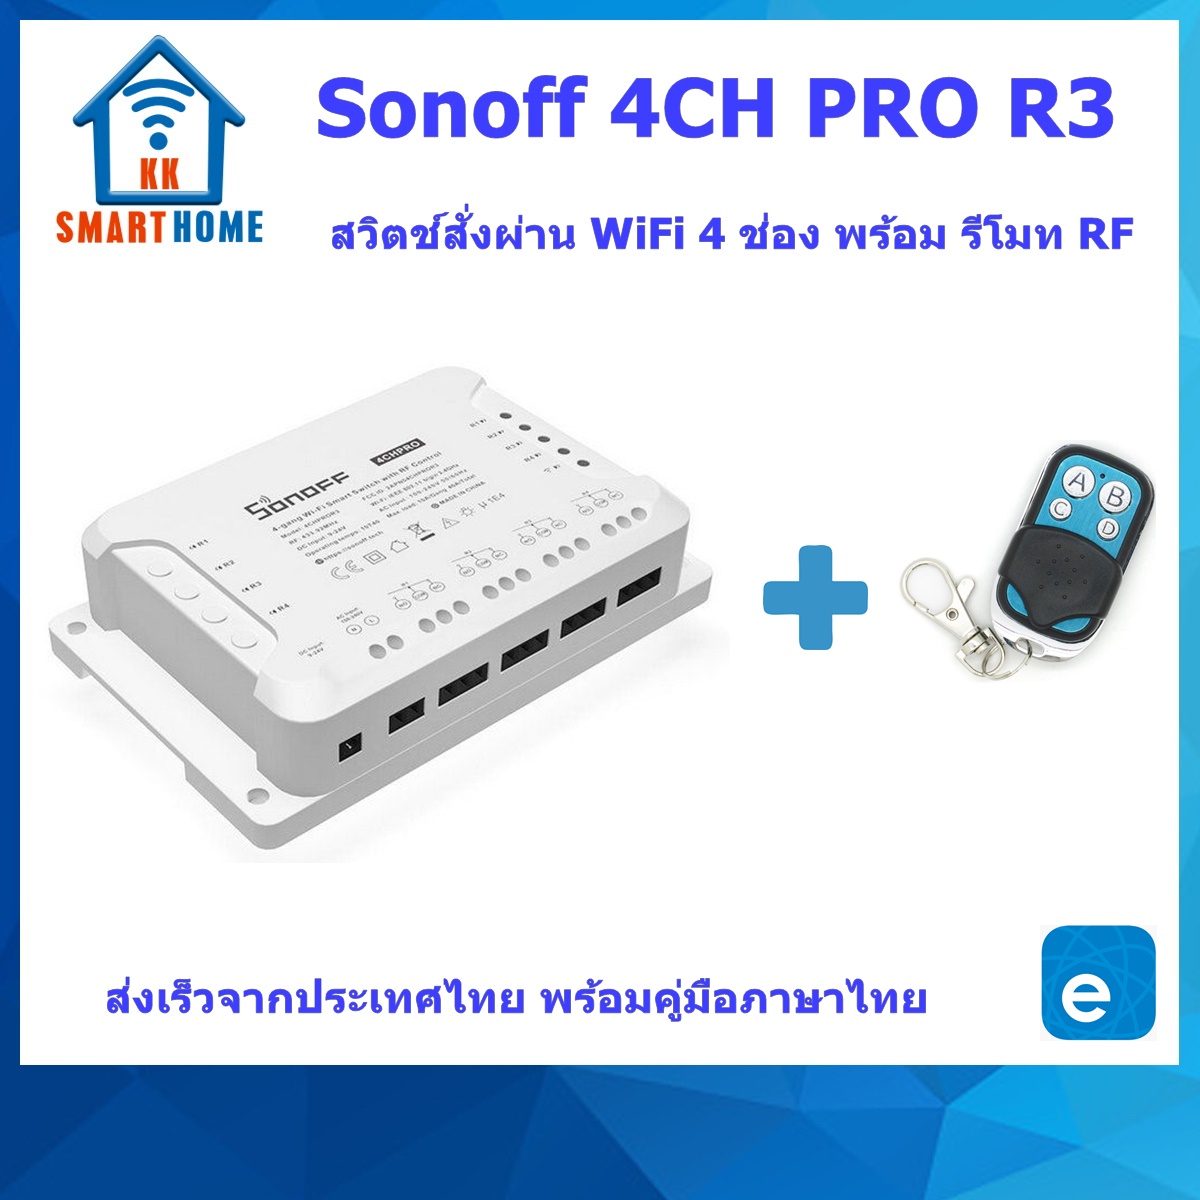 Sonoff 4CH Pro R3 สวิตช์สั่งงานผ่าน WiFi 4 ช่อง แถมฟรี รีโมท RF